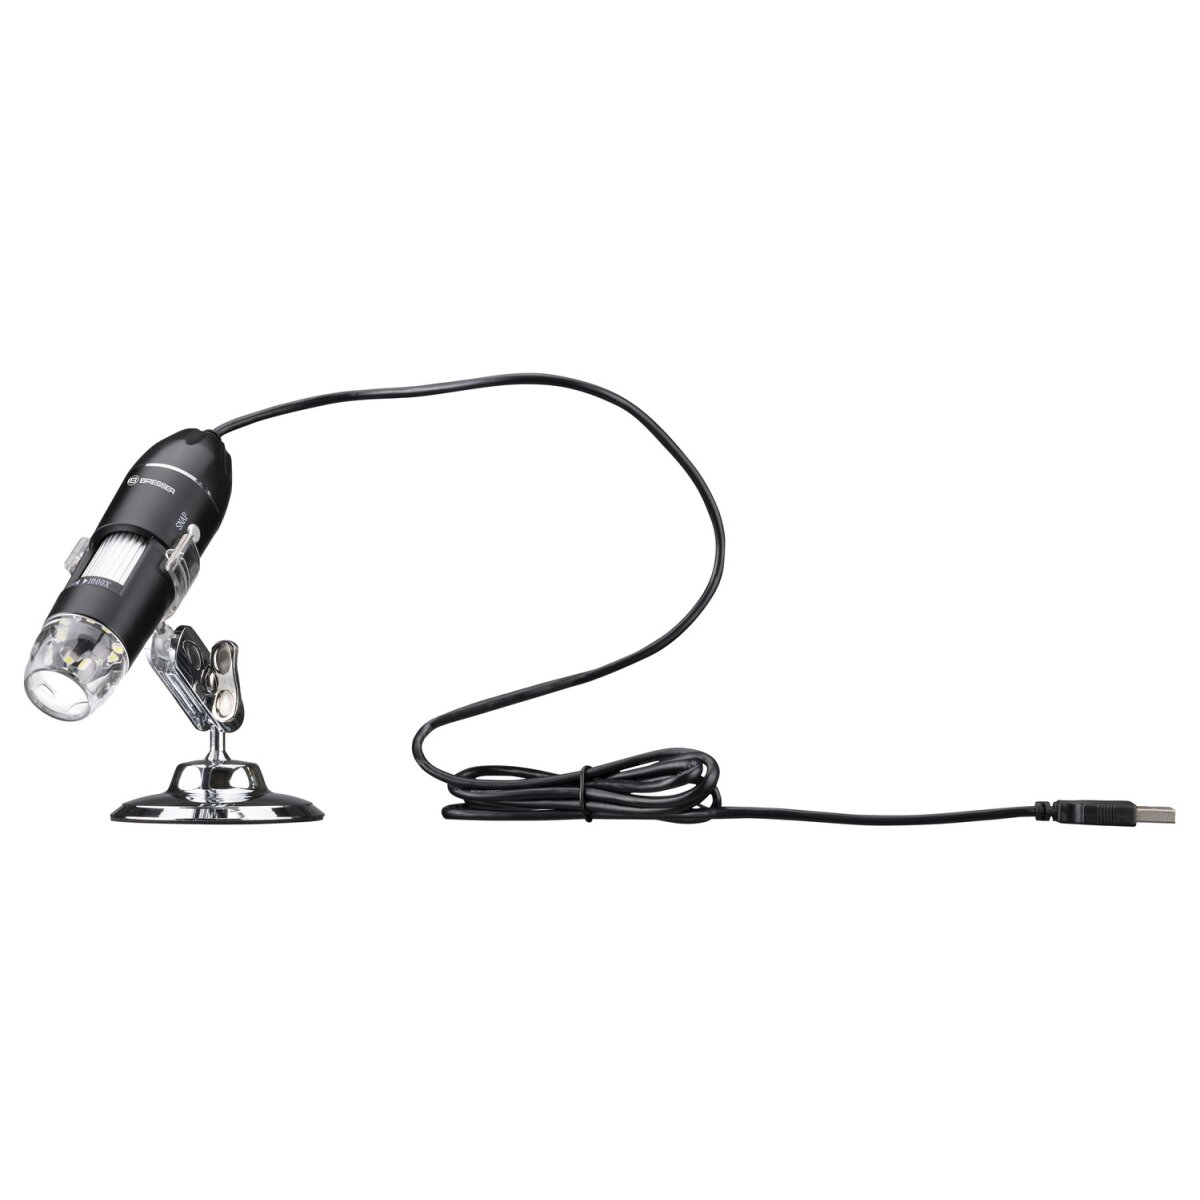 BRESSER Digitales Mikroskop, mit dimmbarer Ringbeleuchtung - B-Ware  neuwertig, 22,99 €